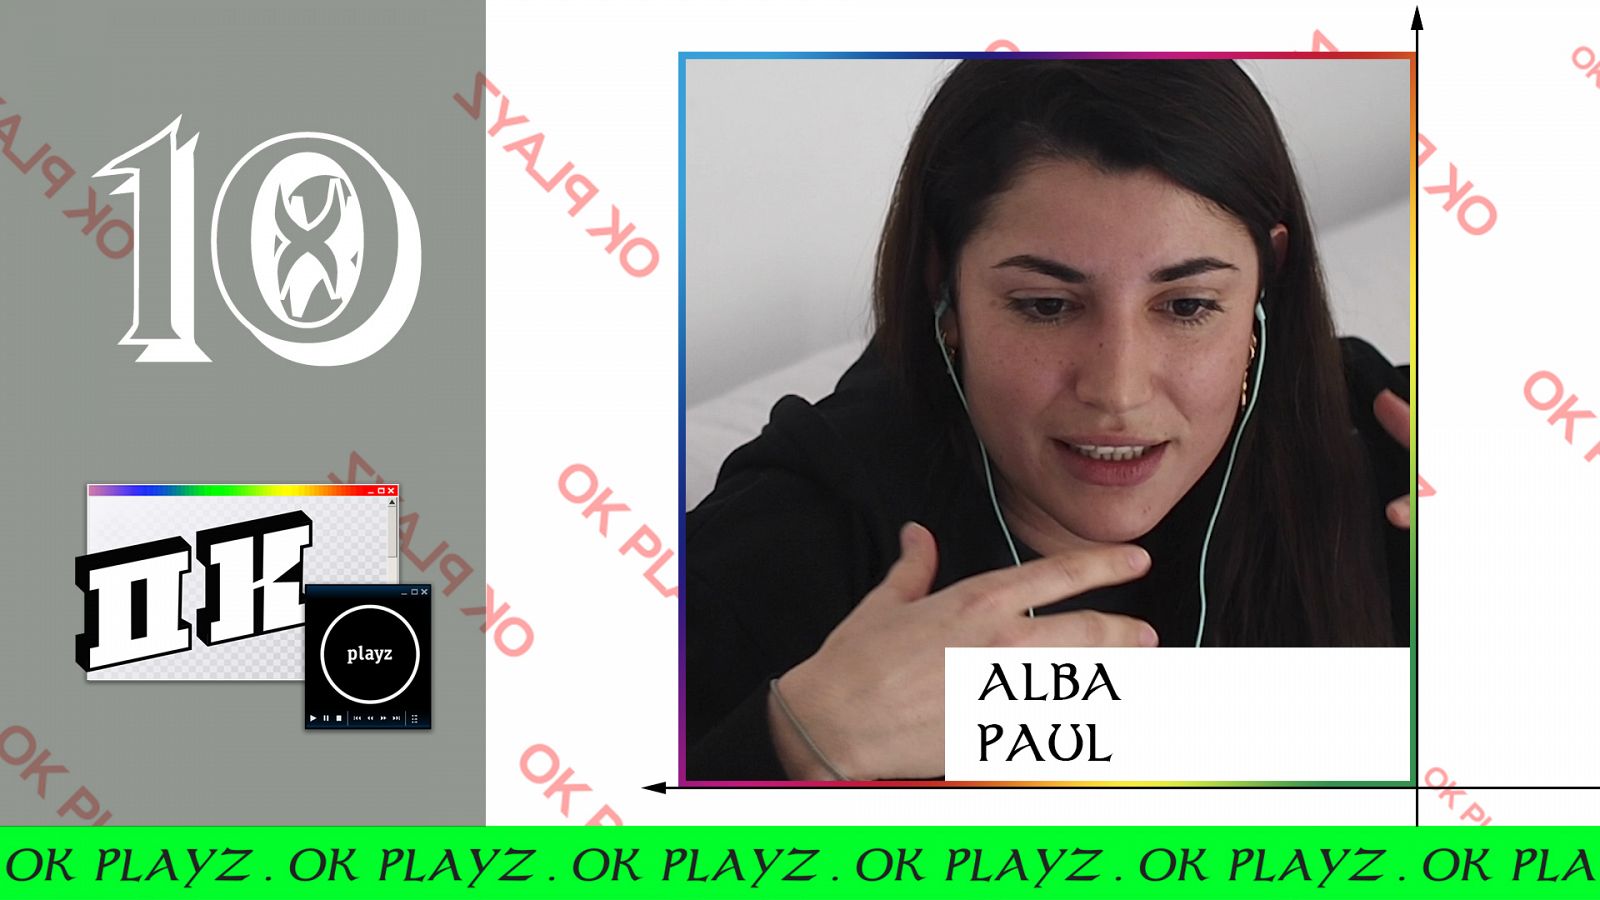 OK Playz - Alba Paul nos da los tips para triunfar en Instagram